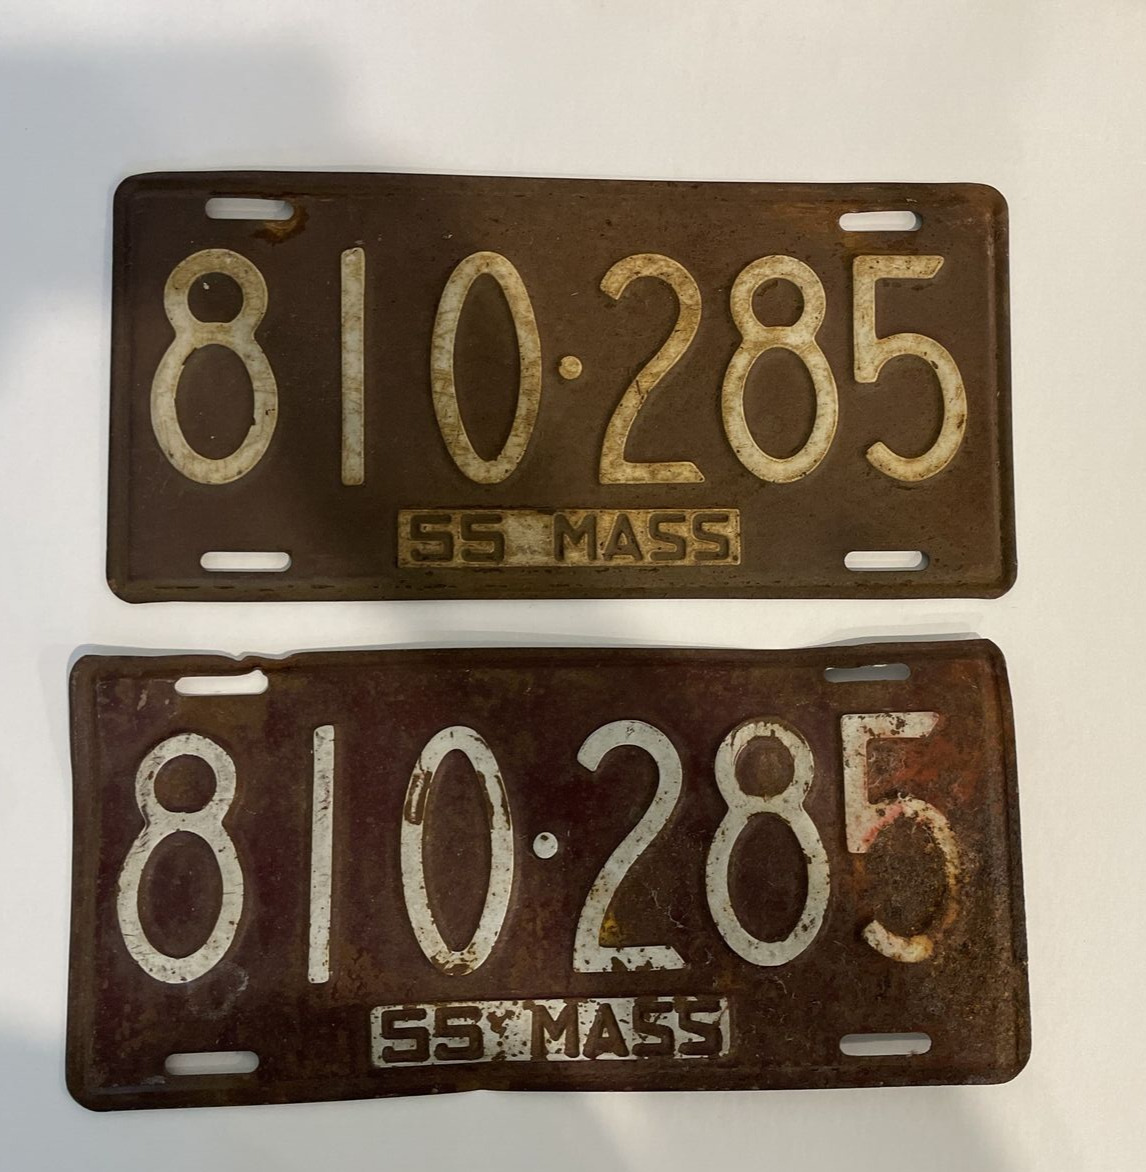 Vintage License Plate 1955 Massachusetts Embossed License Plate Pair #810285